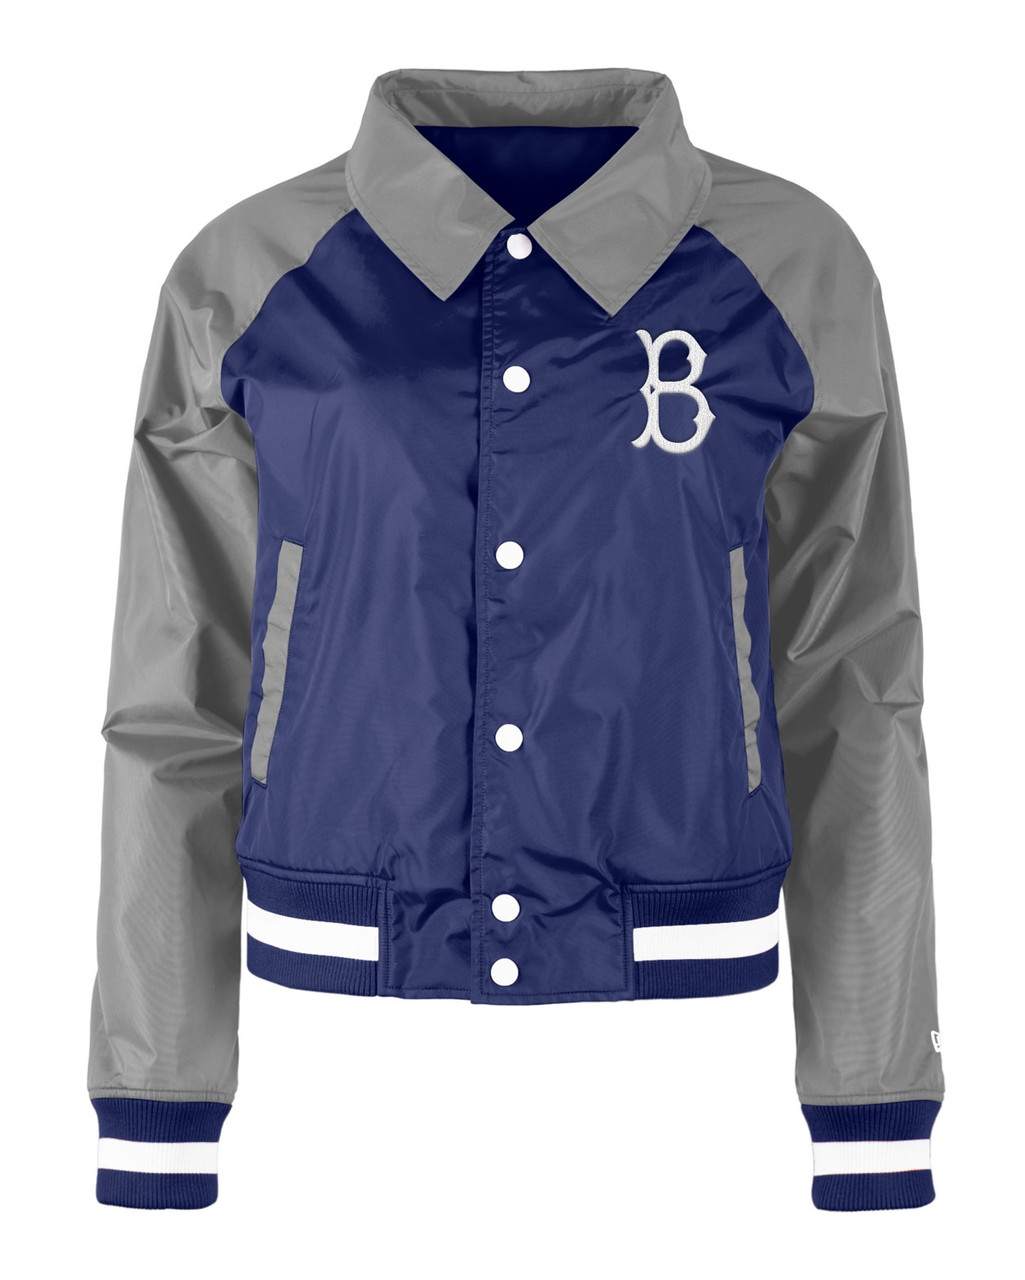 Ladies Brooklyn Dodgers Satin Jacket